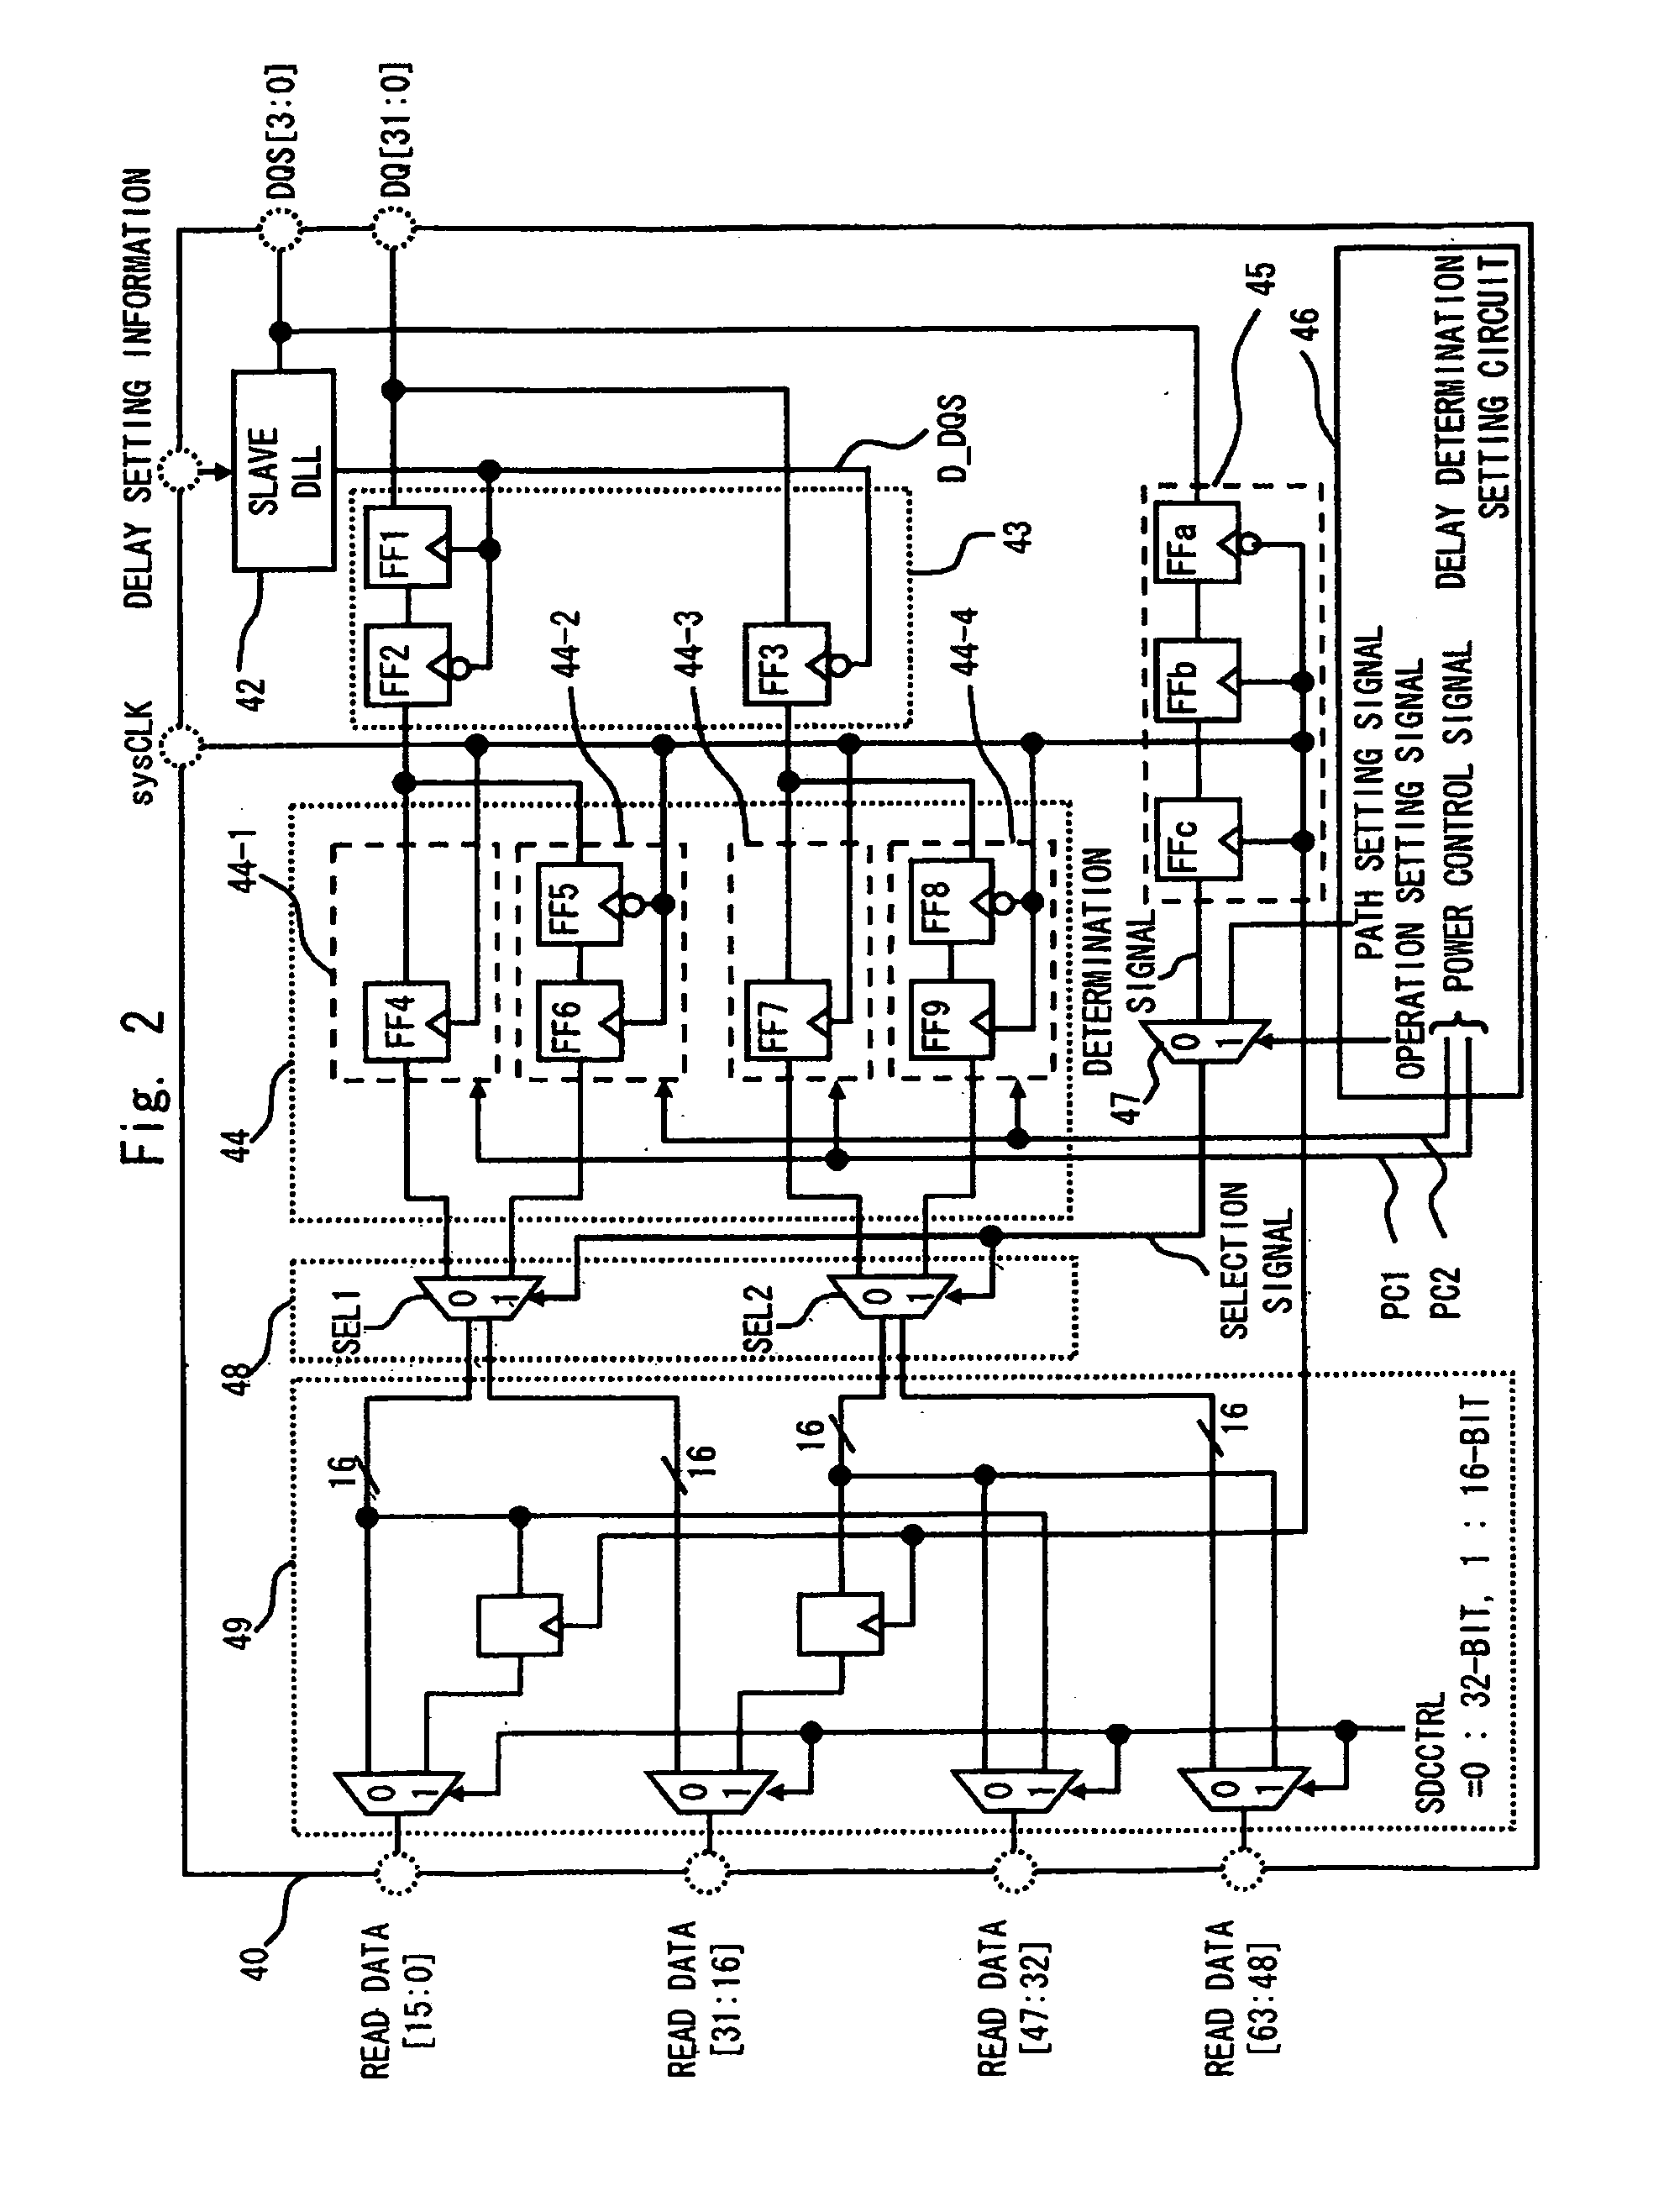 Interface circuit